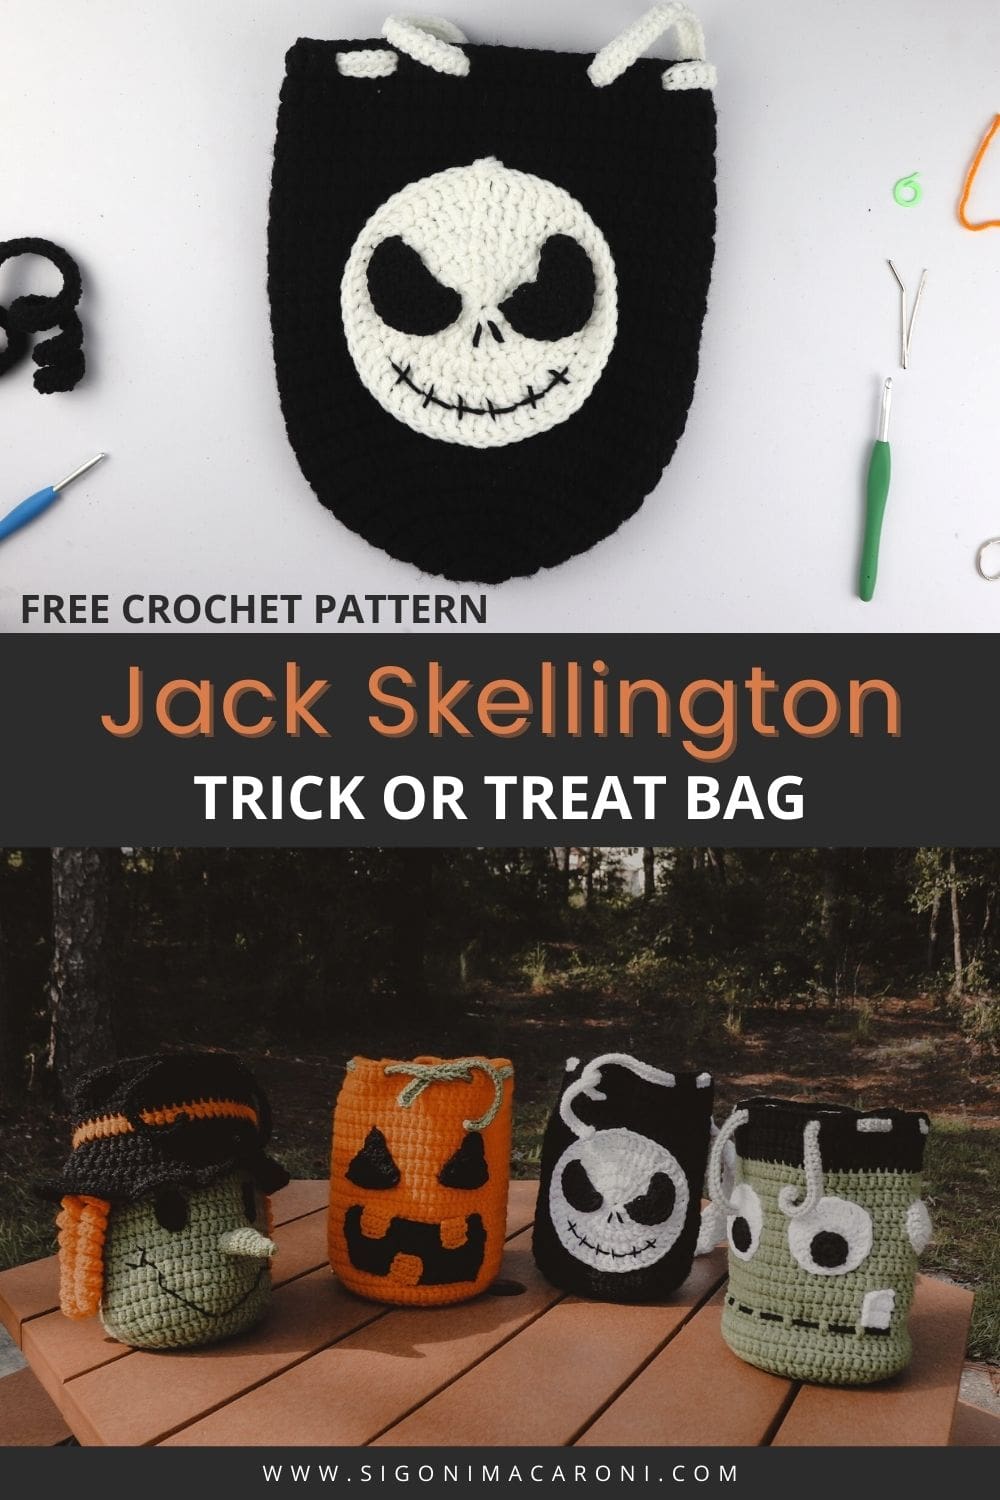 Crochet Jack Skellington Drawstring Backpack | FREE Halloween Crochet Pattern via @sigonimacaronii